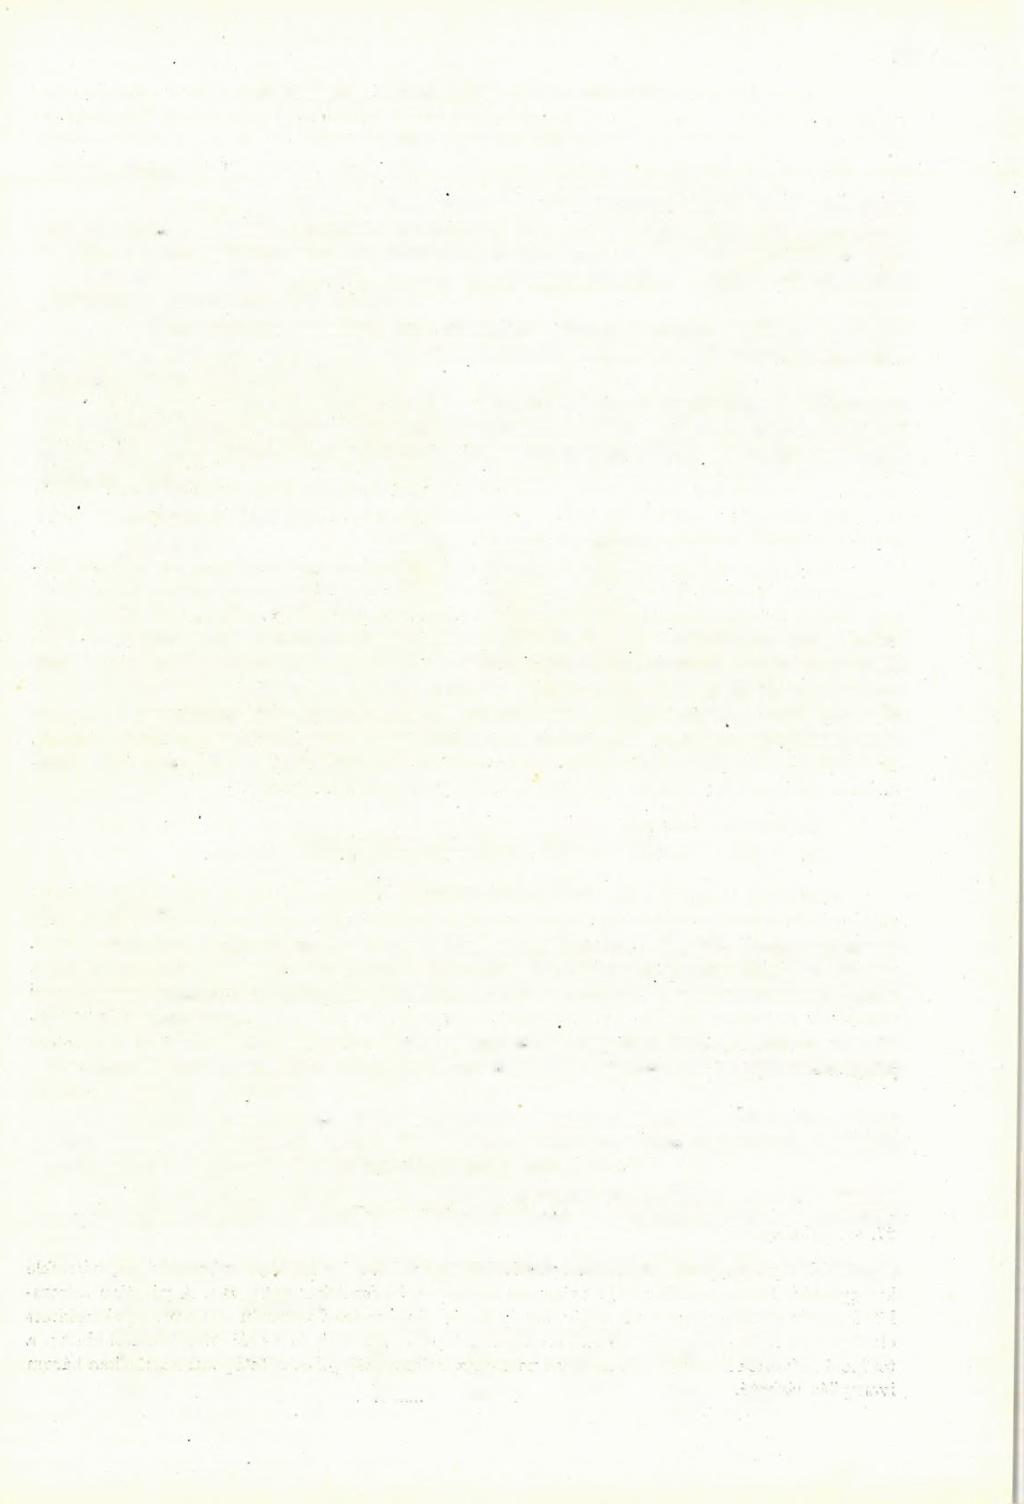 23 Tristomanthus subcylindricus [ A g a s s iz ], 1846. 28. sz. példány. V. tábla, 4., 4. a b.